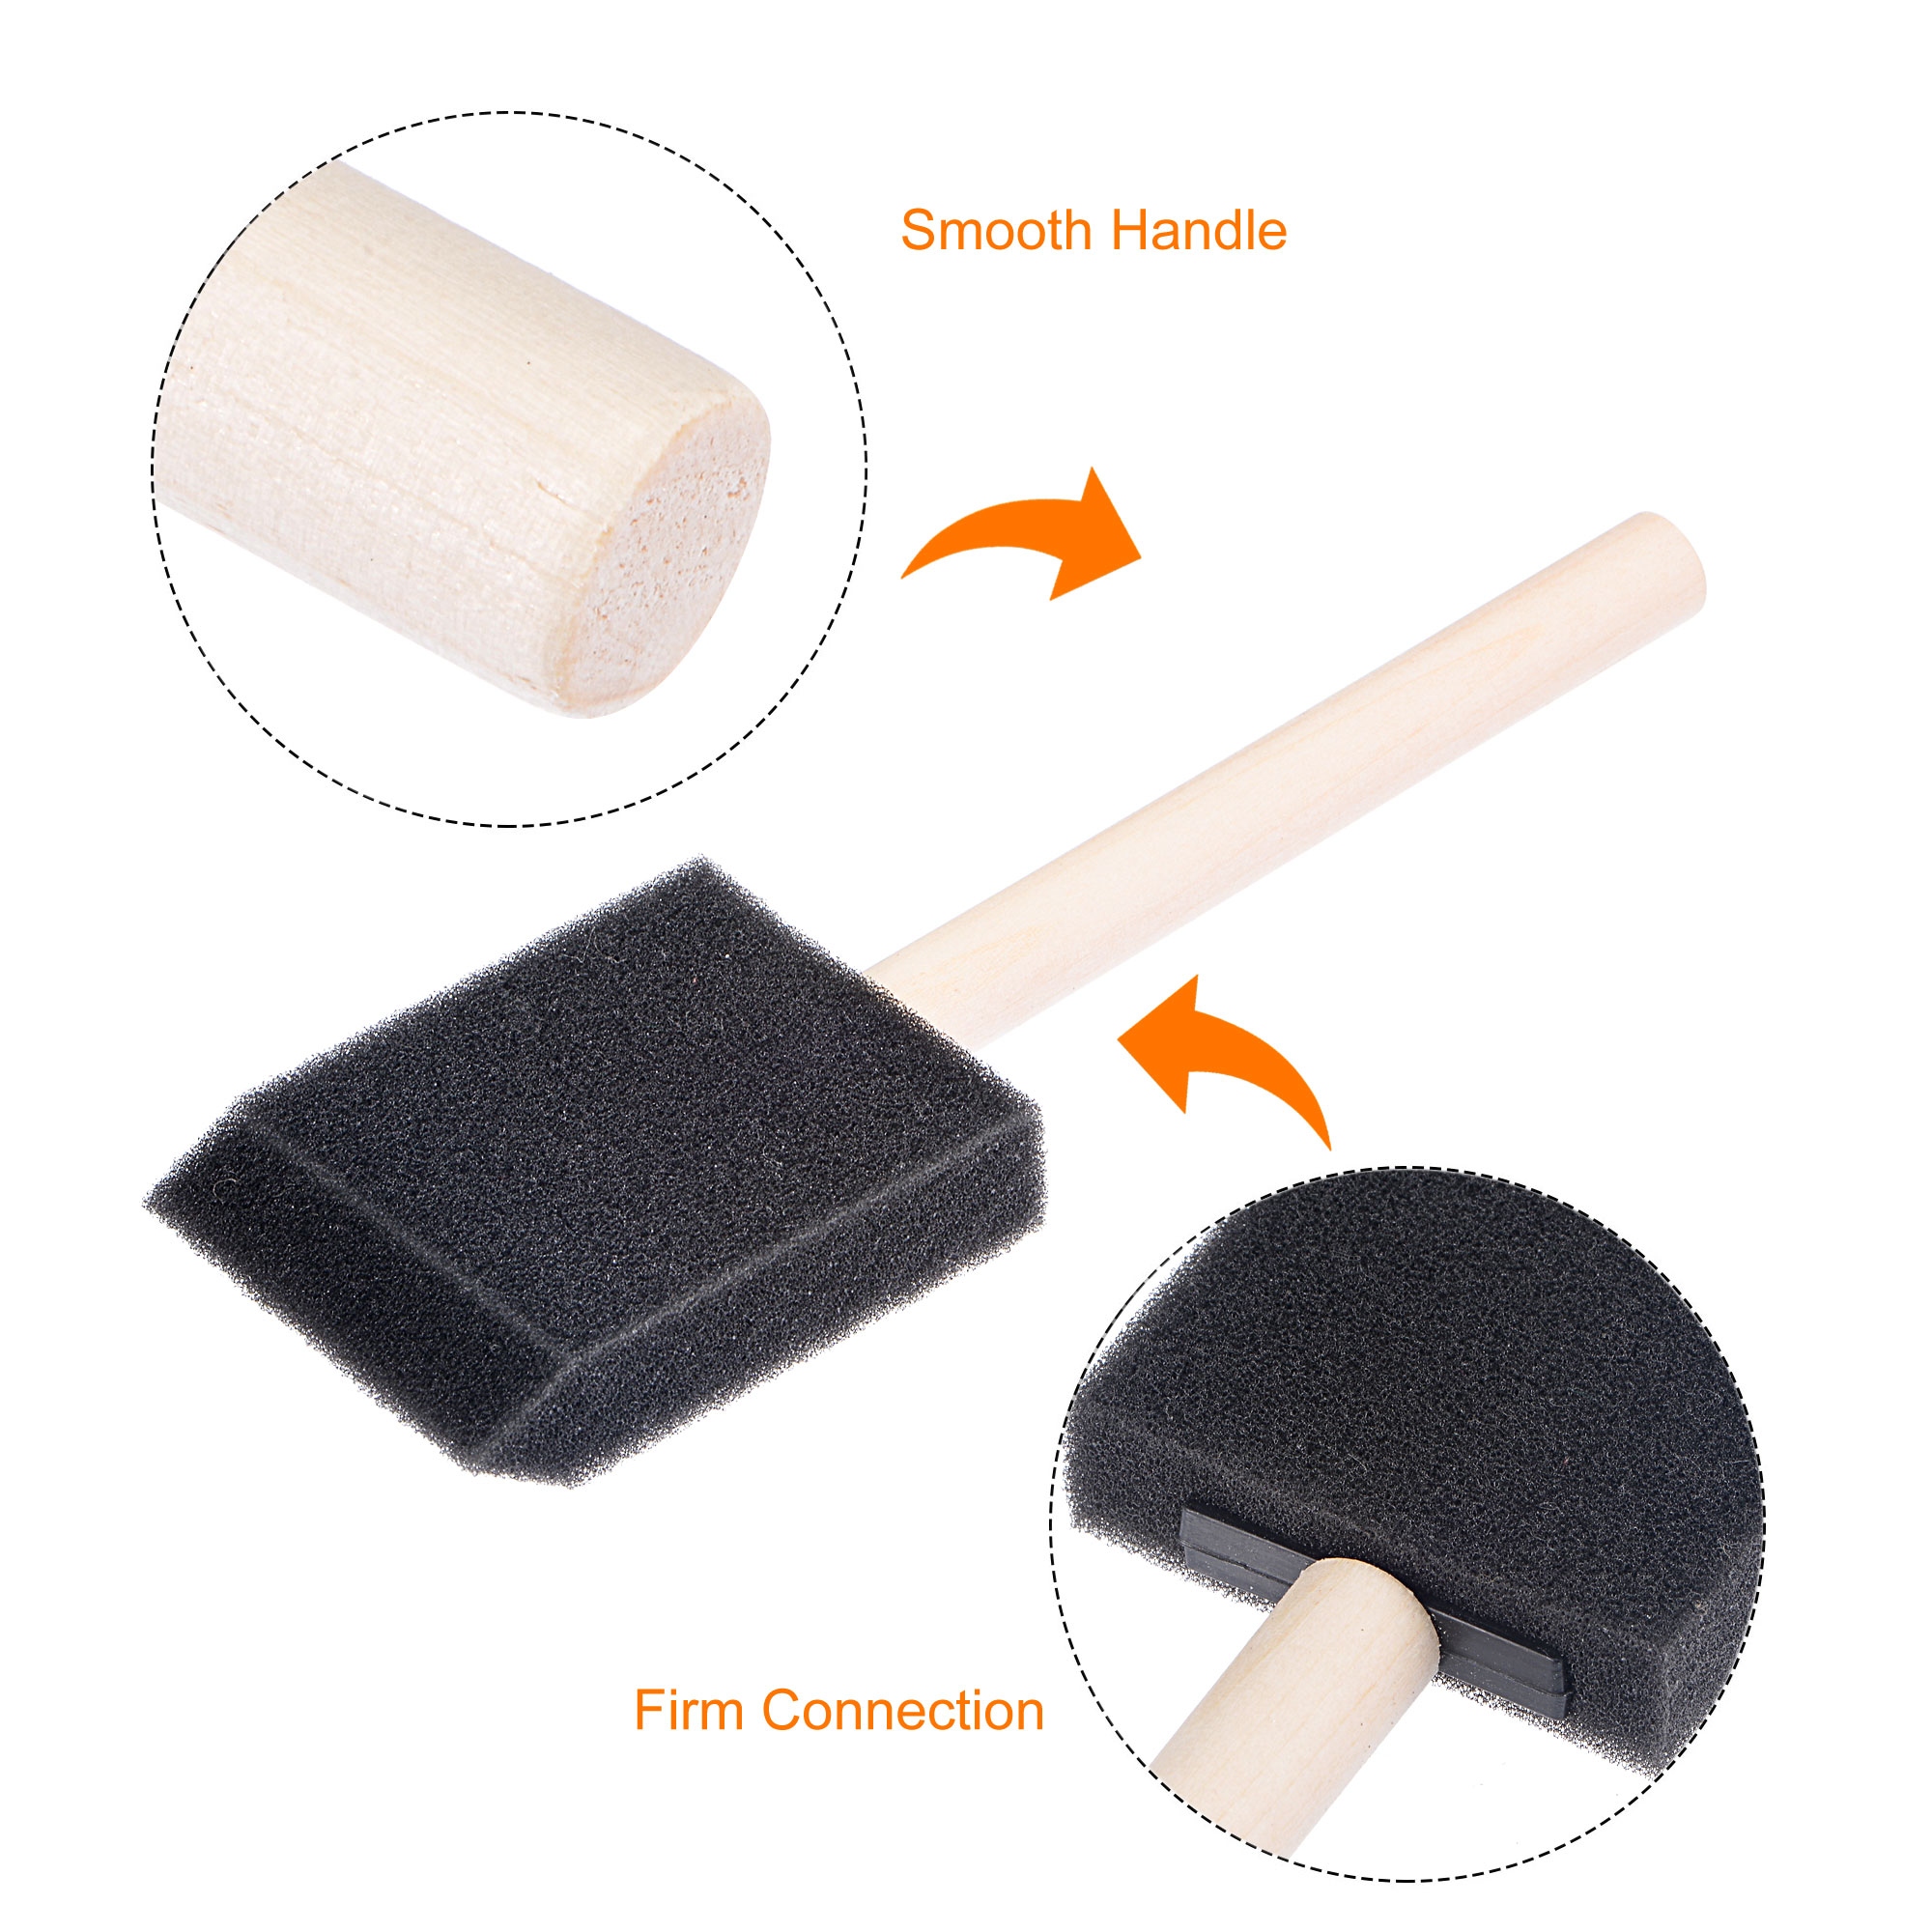 2 inch Foam Paint Brushes Bevel Edge W Wood Handle Sponge Brush 48pcs - Black - 2